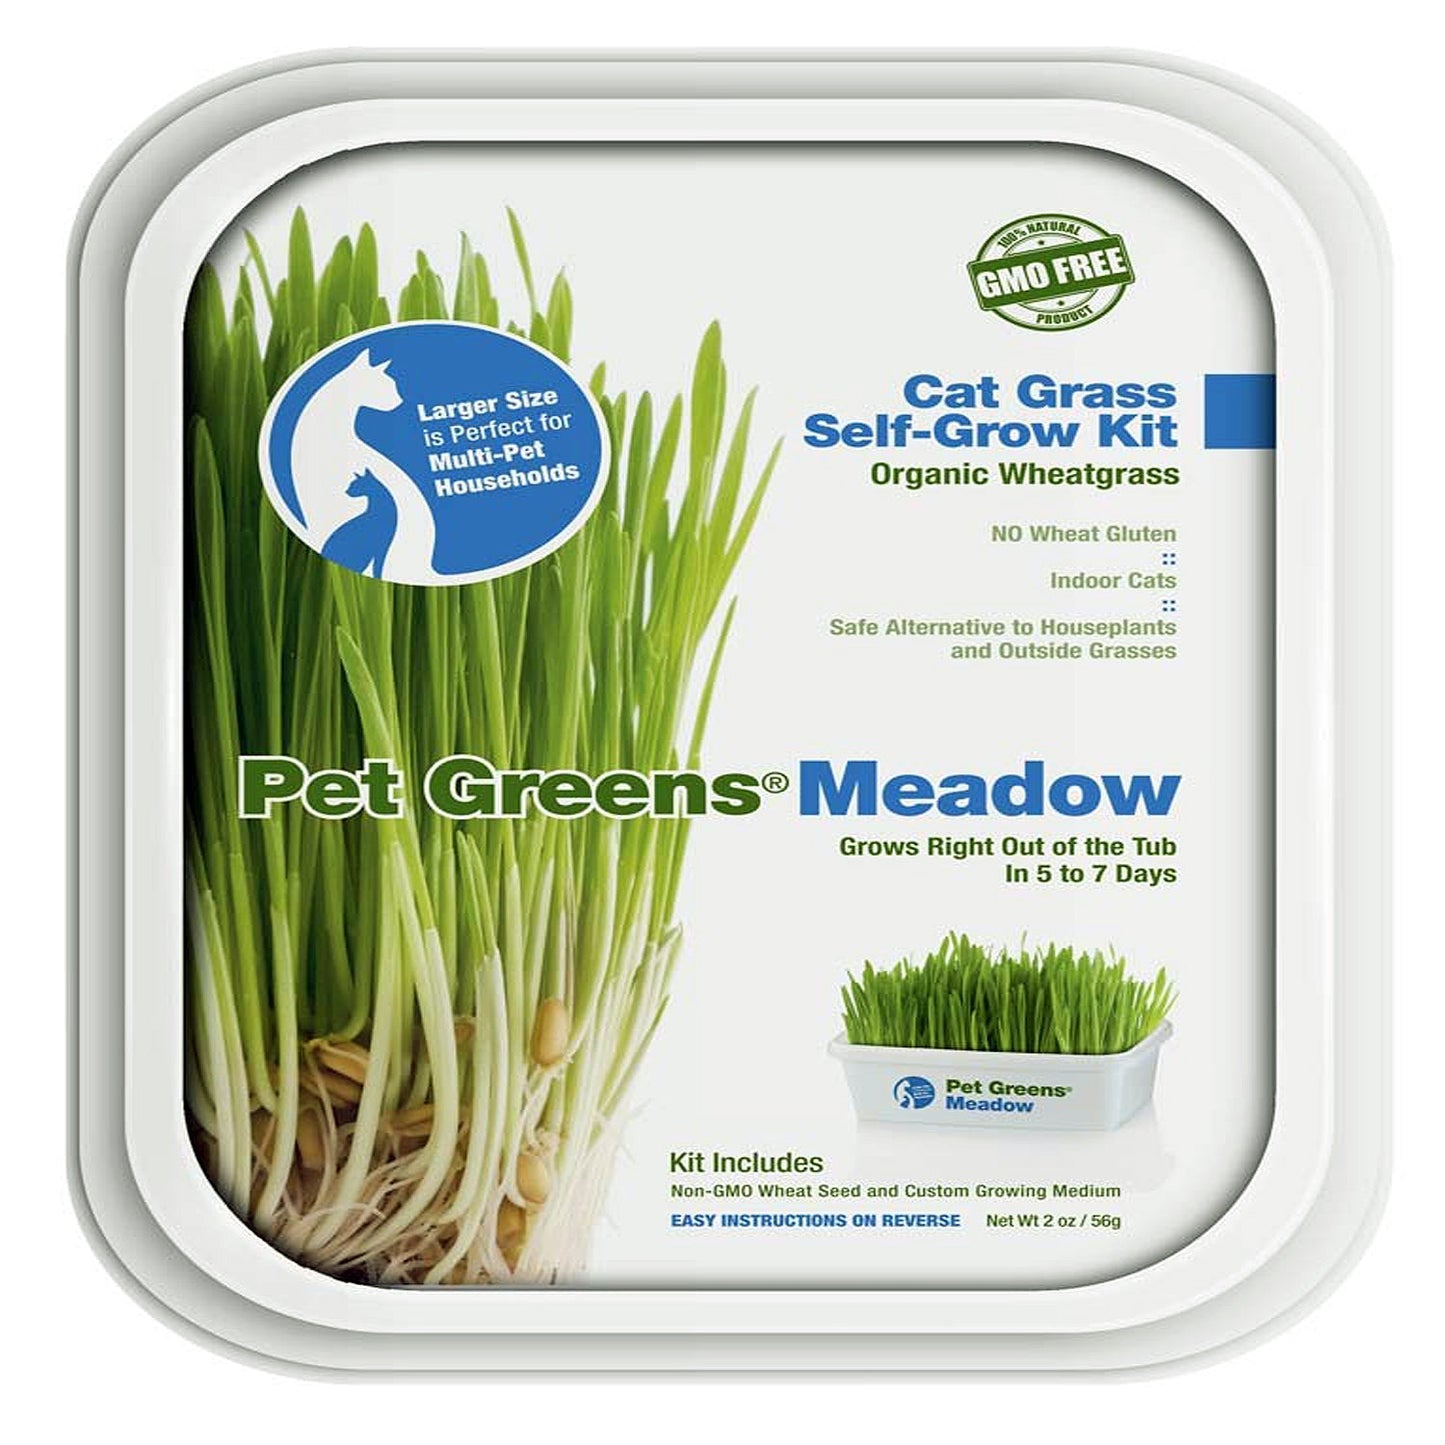 Pet Greens Meadow Pet Grass Self-Grow Kit Organic Wheatgrass 1ea/2 oz